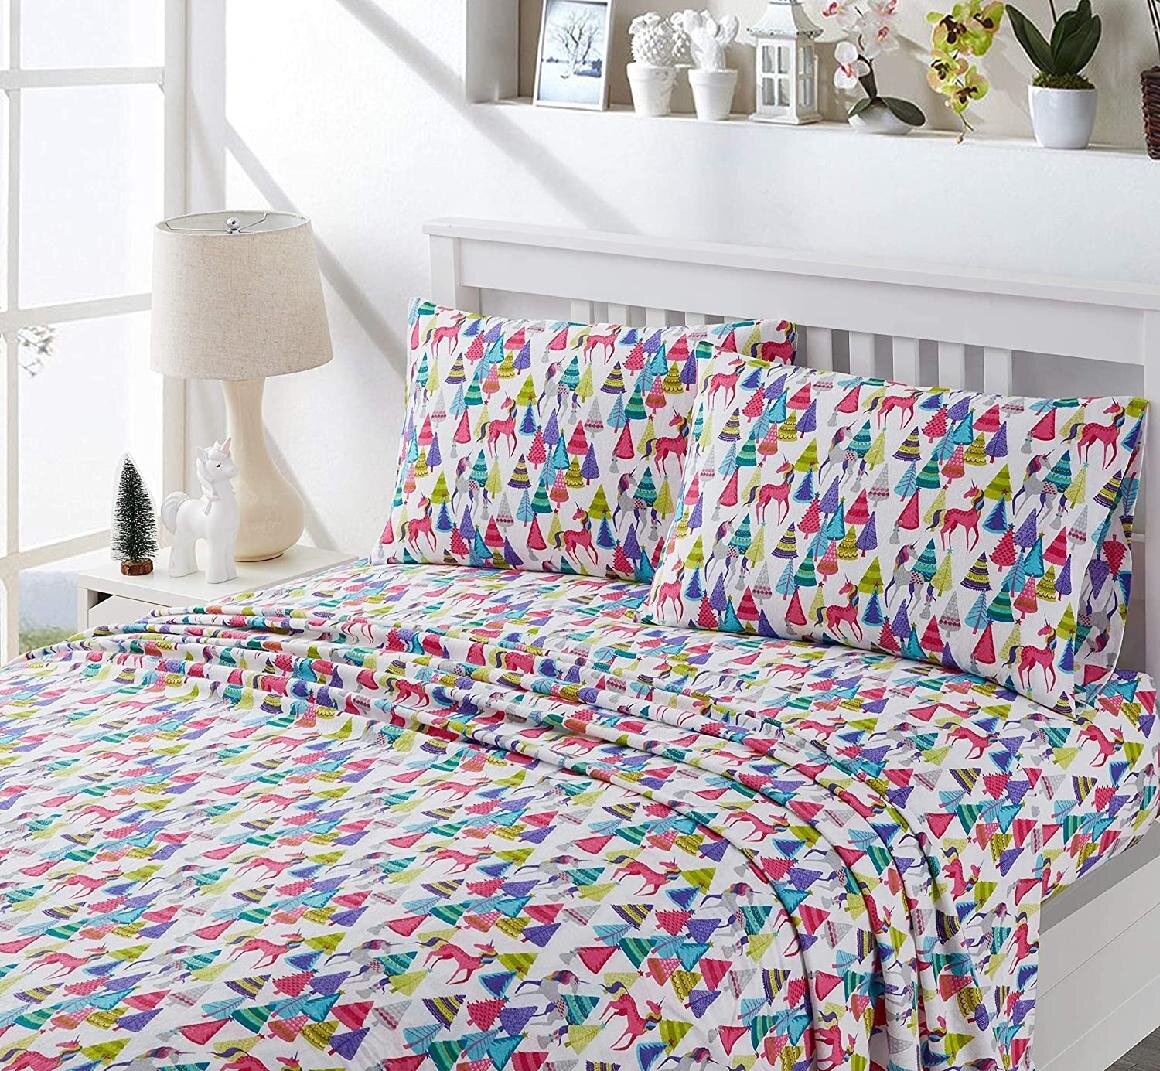 Turkish Flannel Sheets Brushed Cotton Supreme Comfort Twin Size Bed Sheet Set 